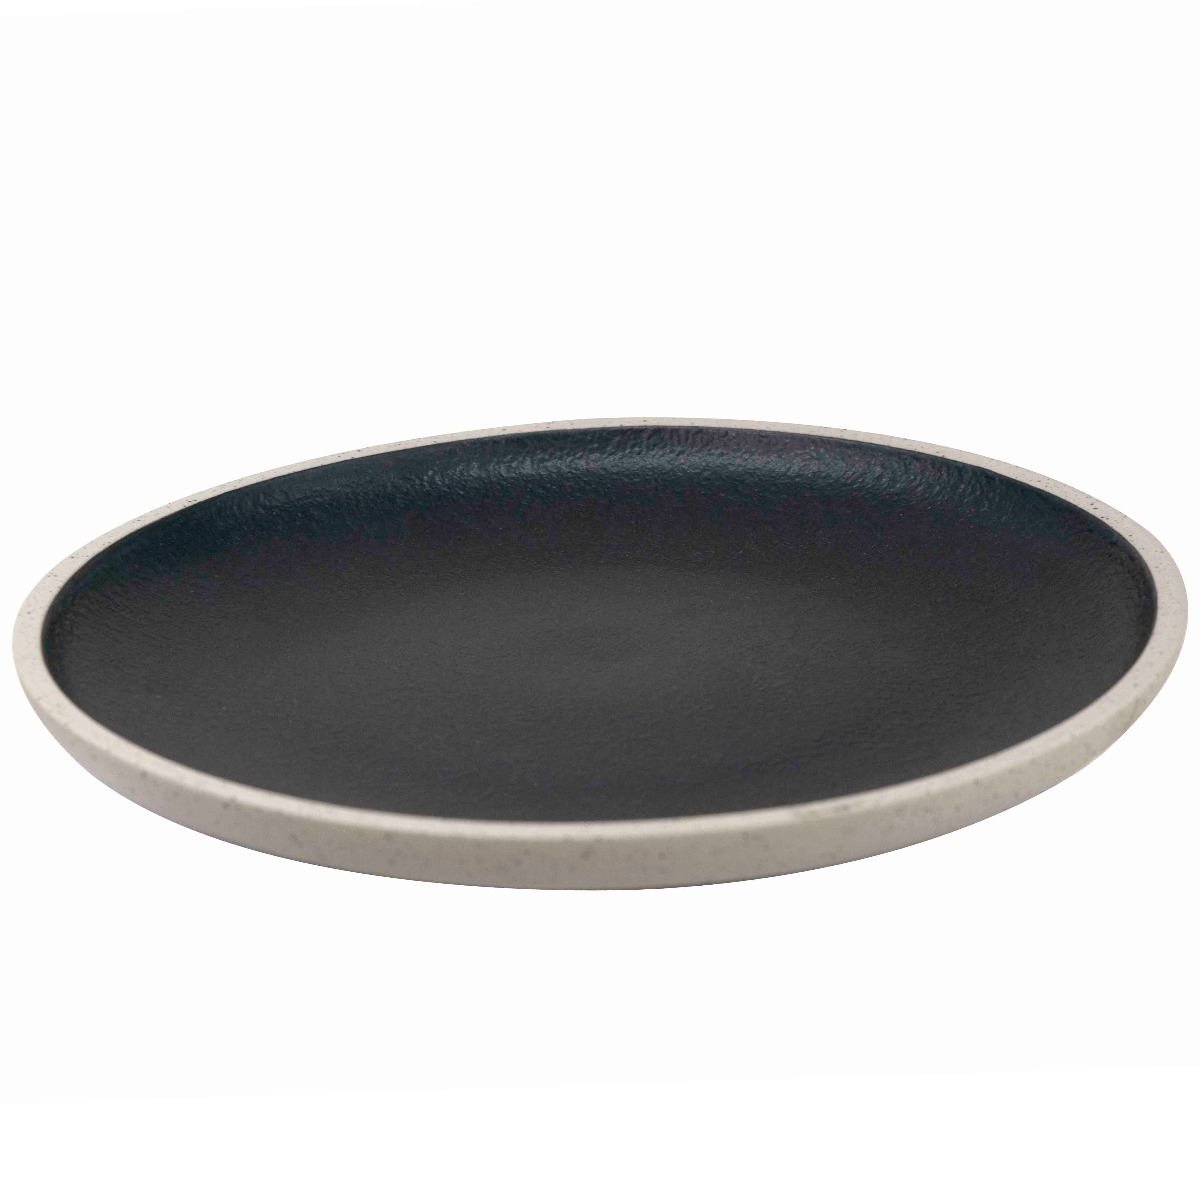 Ceramic serving plate 20cm-KR011707